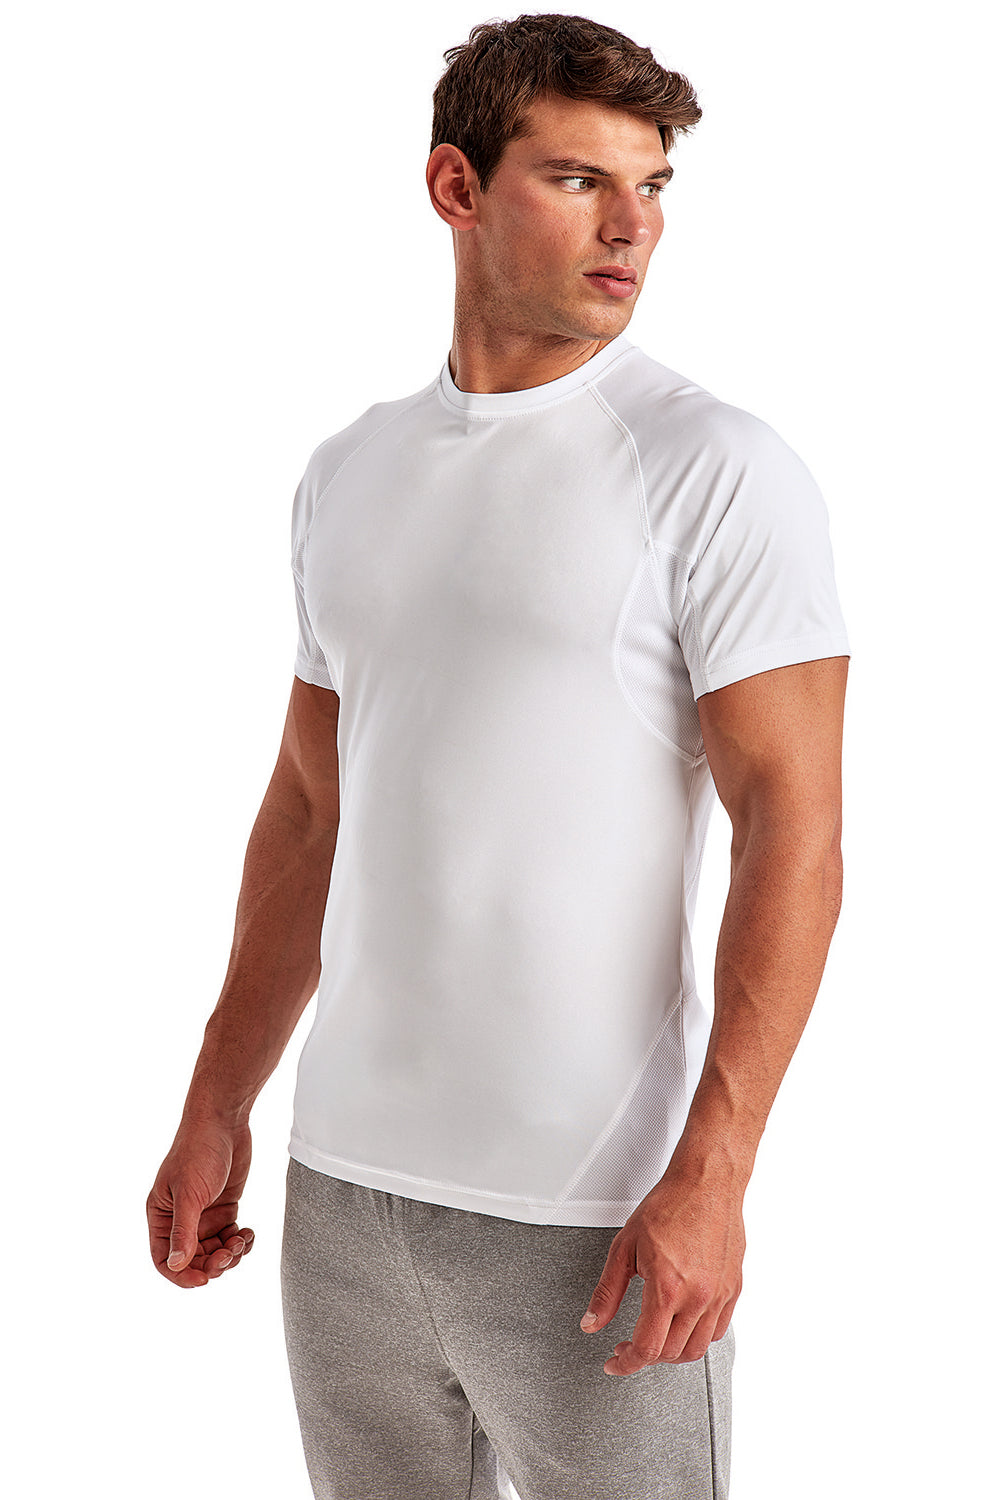 TriDri TD011 Mens Panelled Tech Moisture Wicking Short Sleeve Crewneck T-Shirt White 3Q